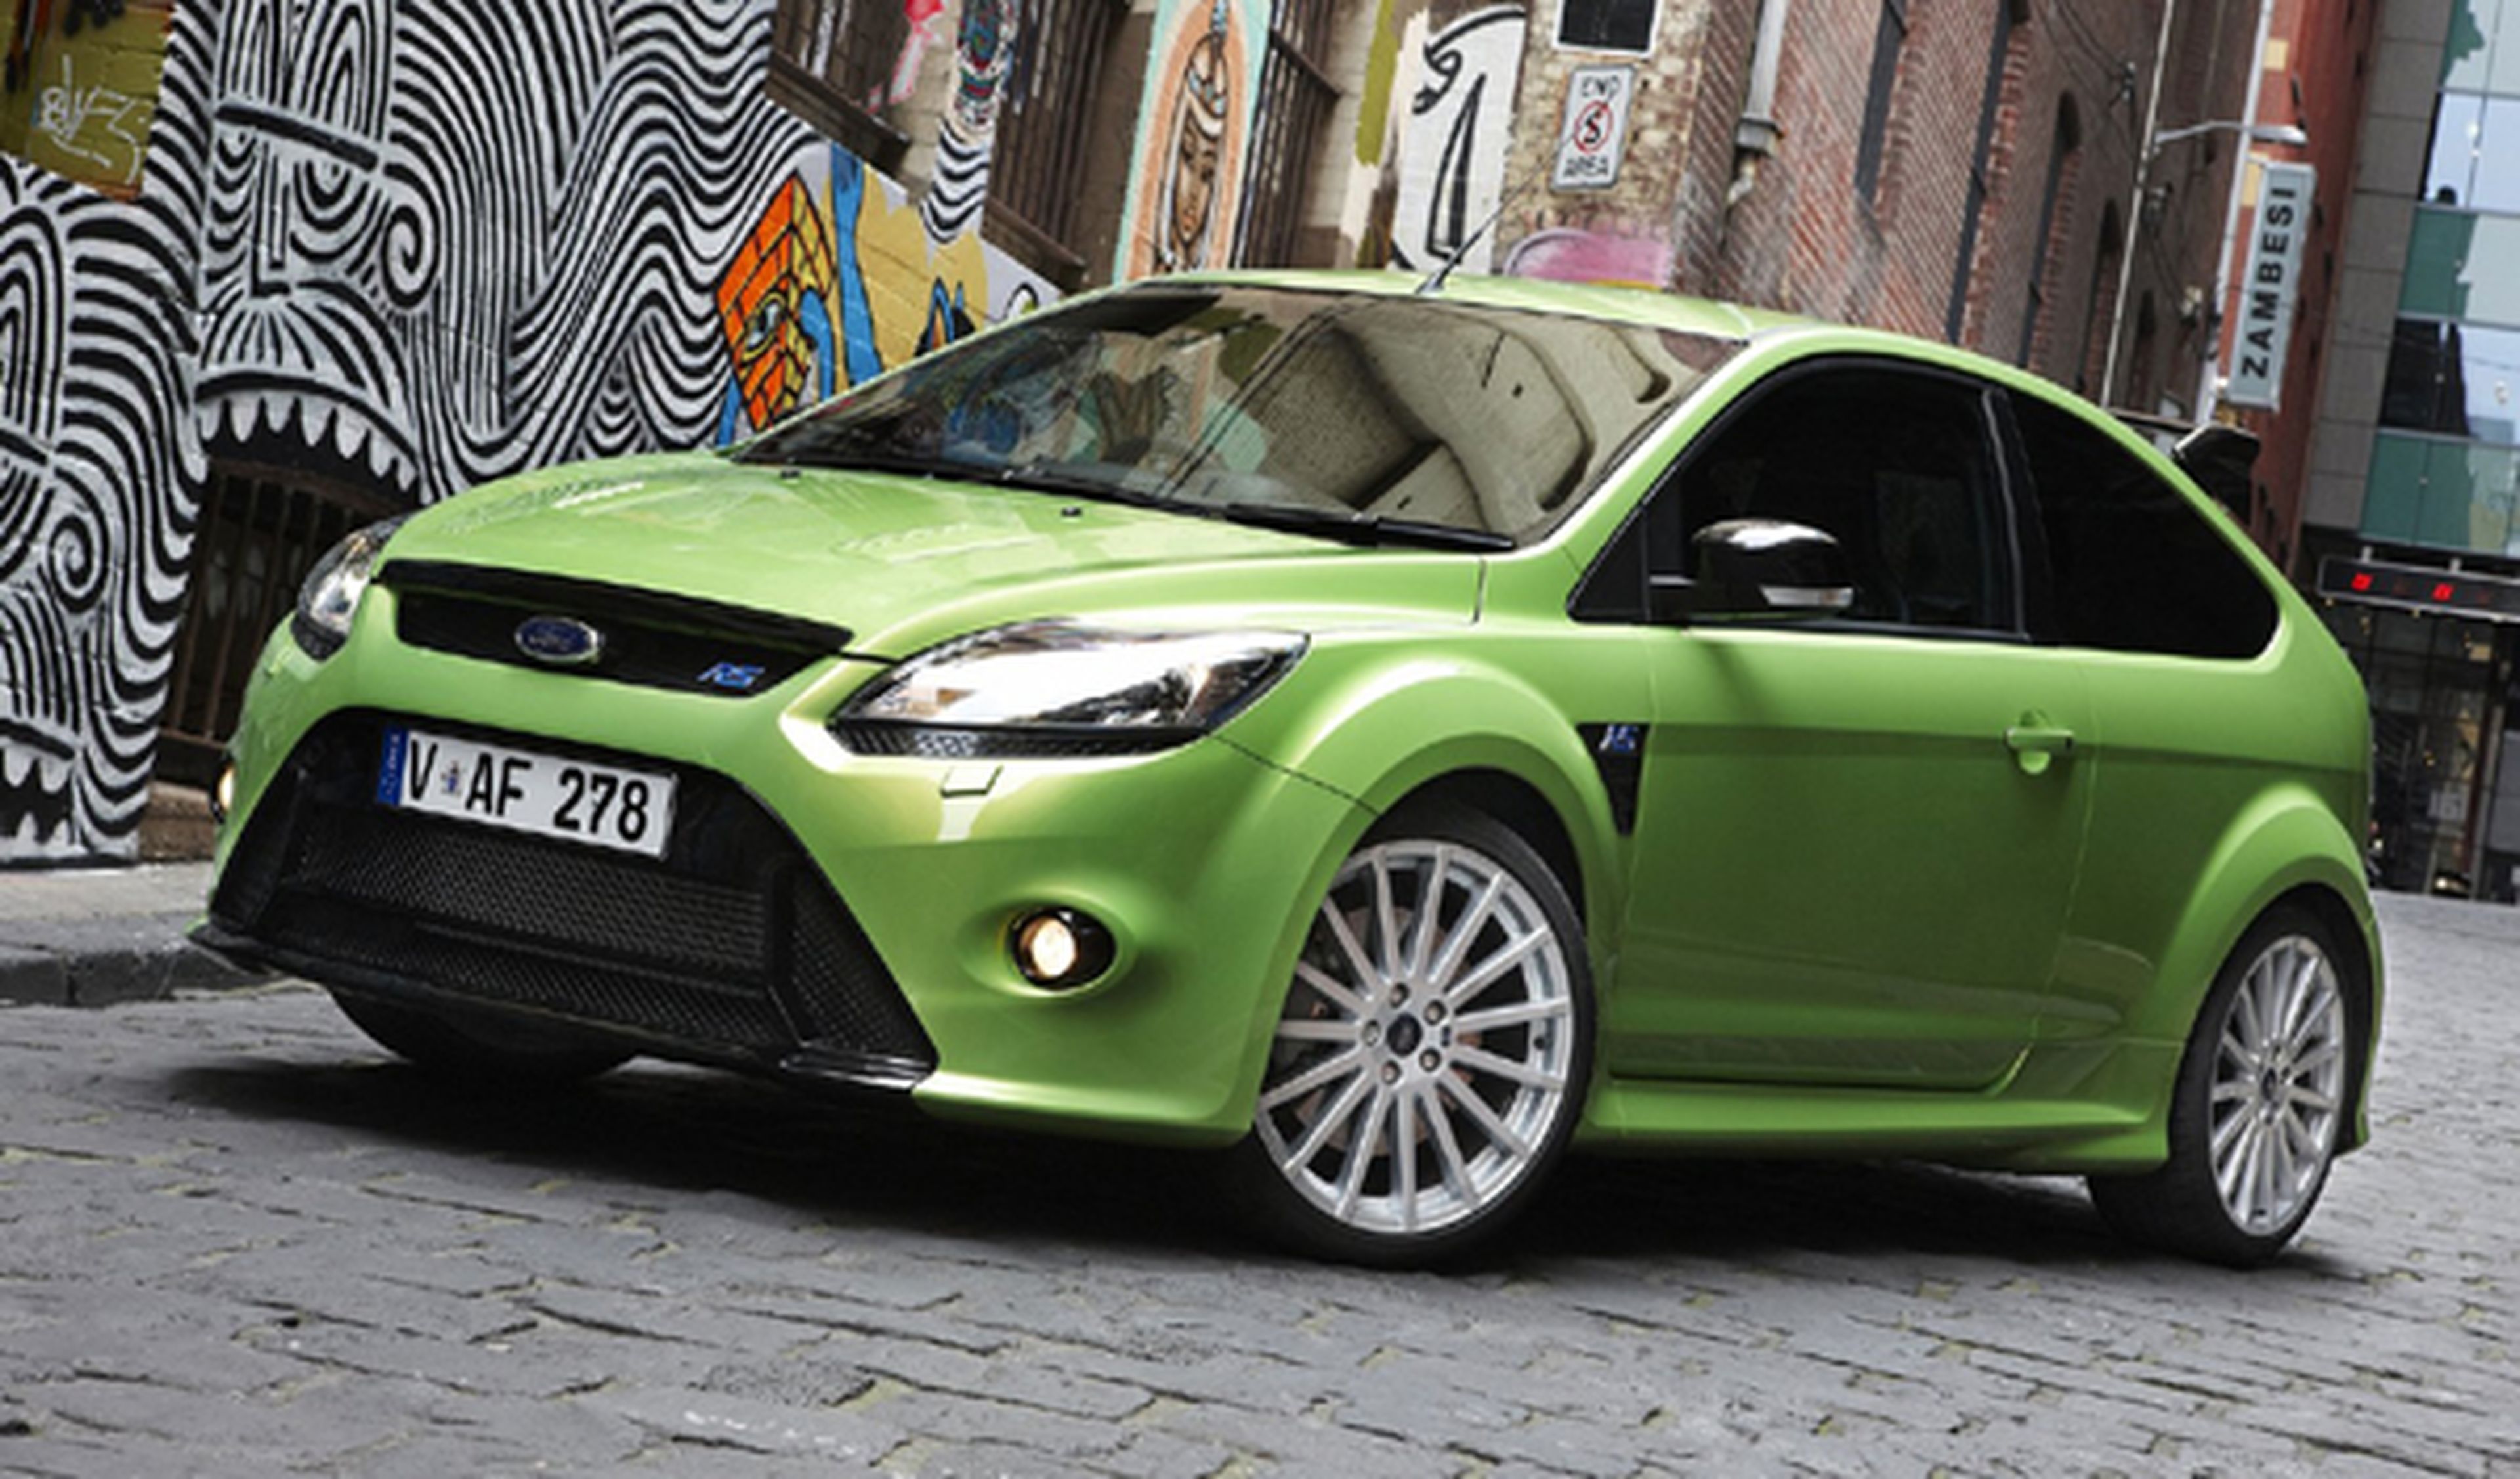 Mejores colores de Ford: Verde Eléctrico Ultimate